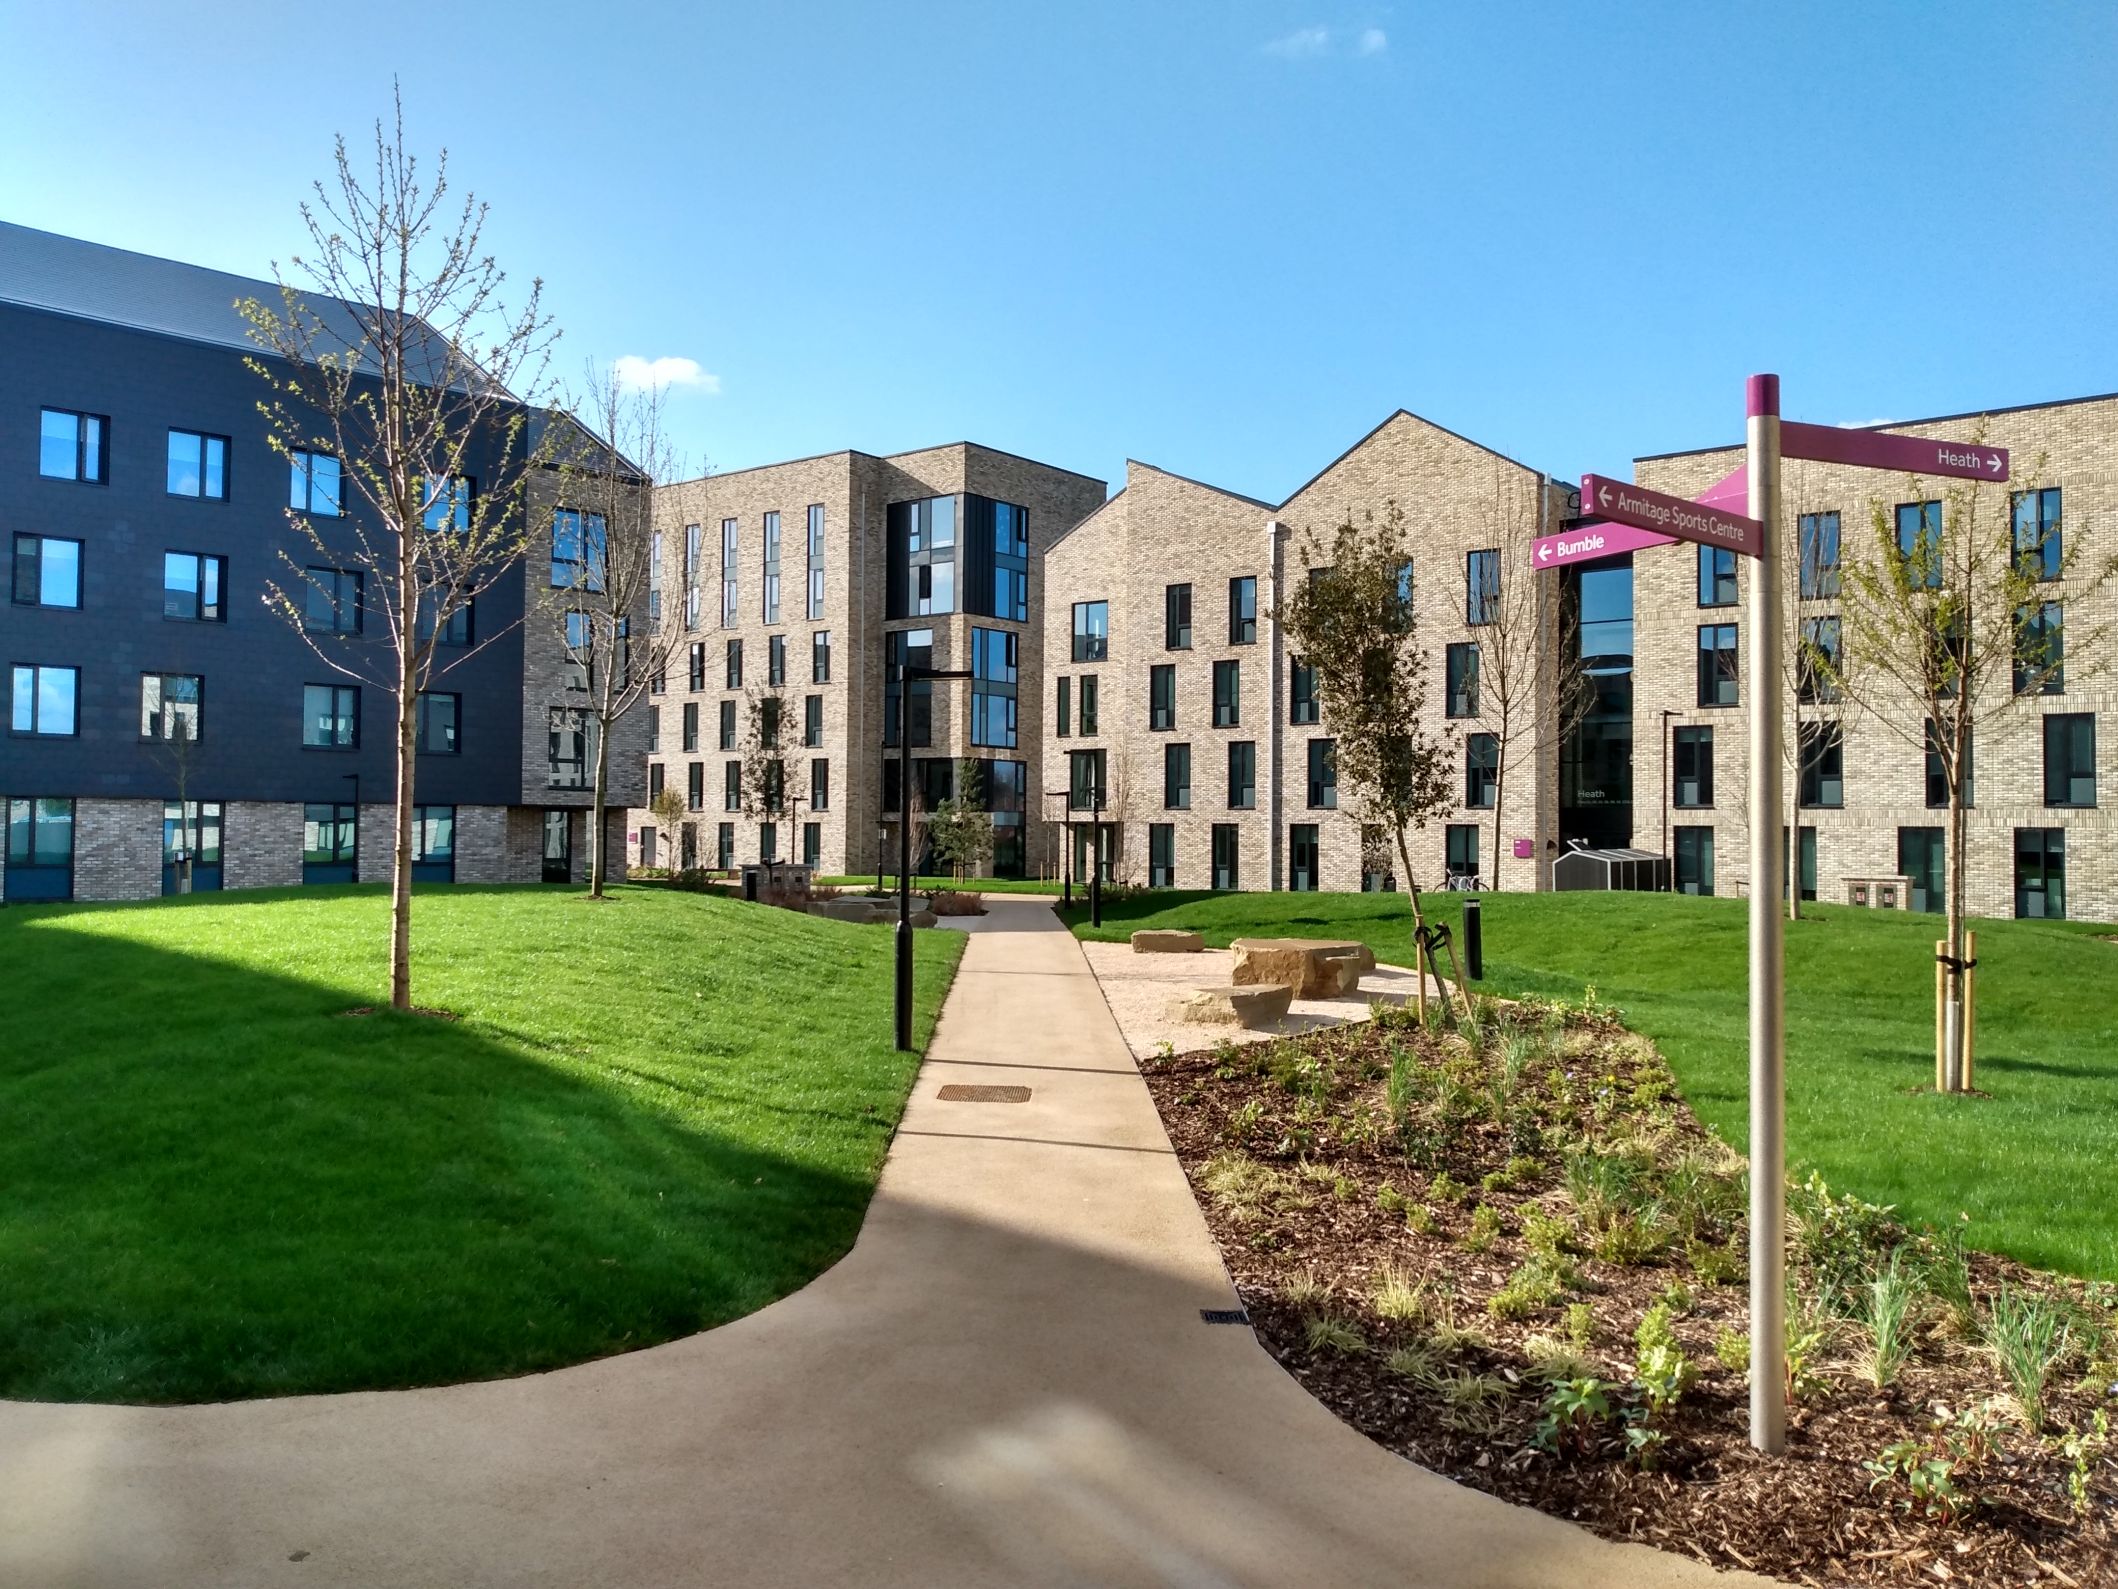 university of manchester phd accommodation